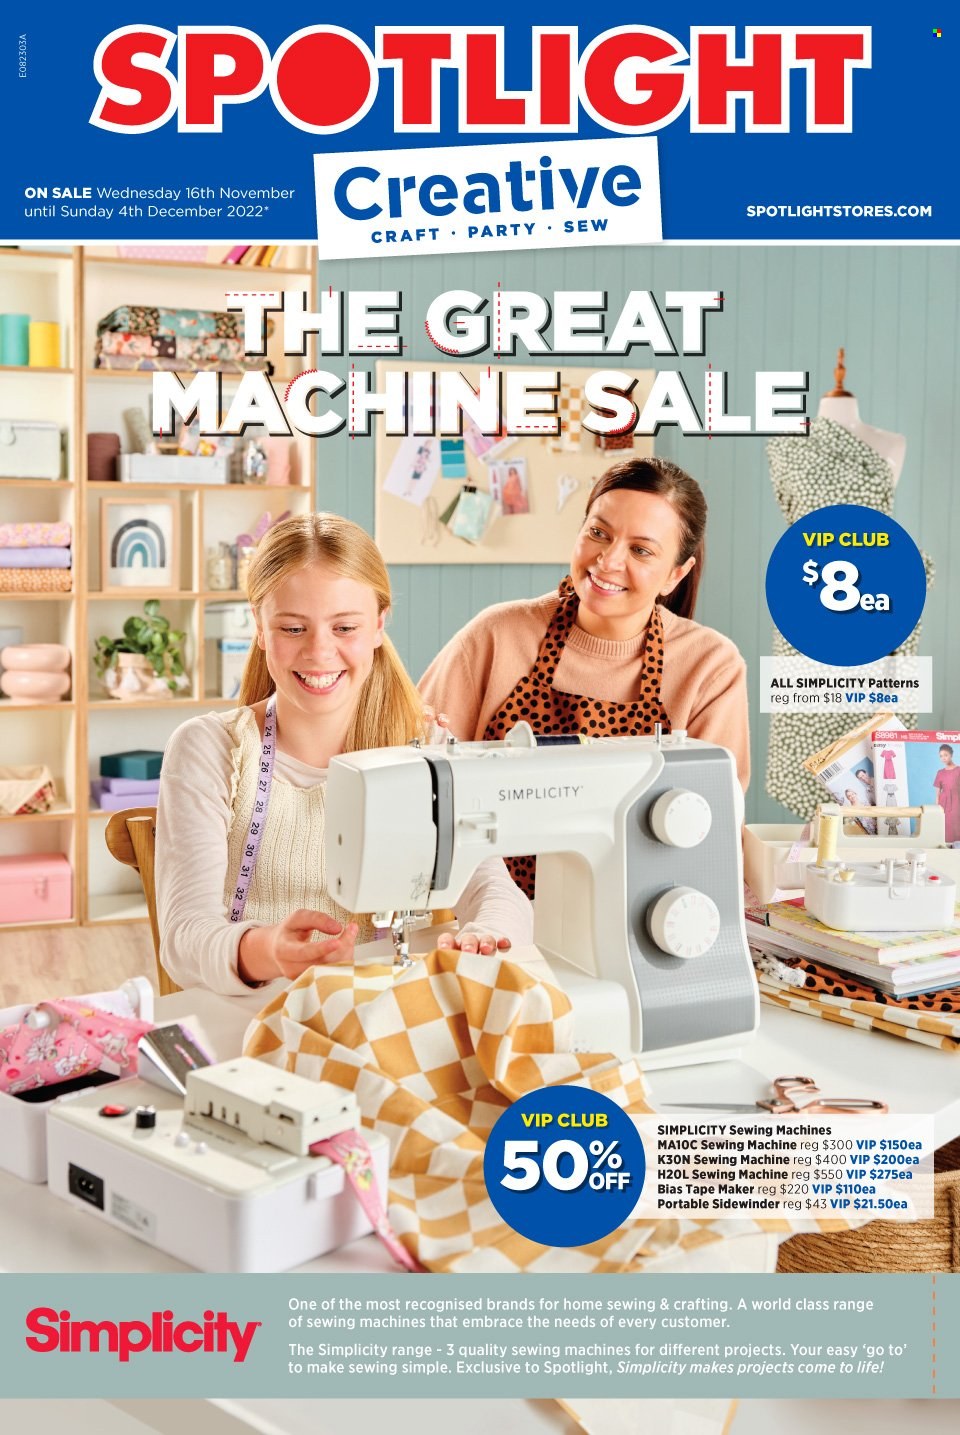 Spotlight Catalogue - 16 Nov 2022 - 4 Dec 2022 - Sales products - sewing machine. Page 1.